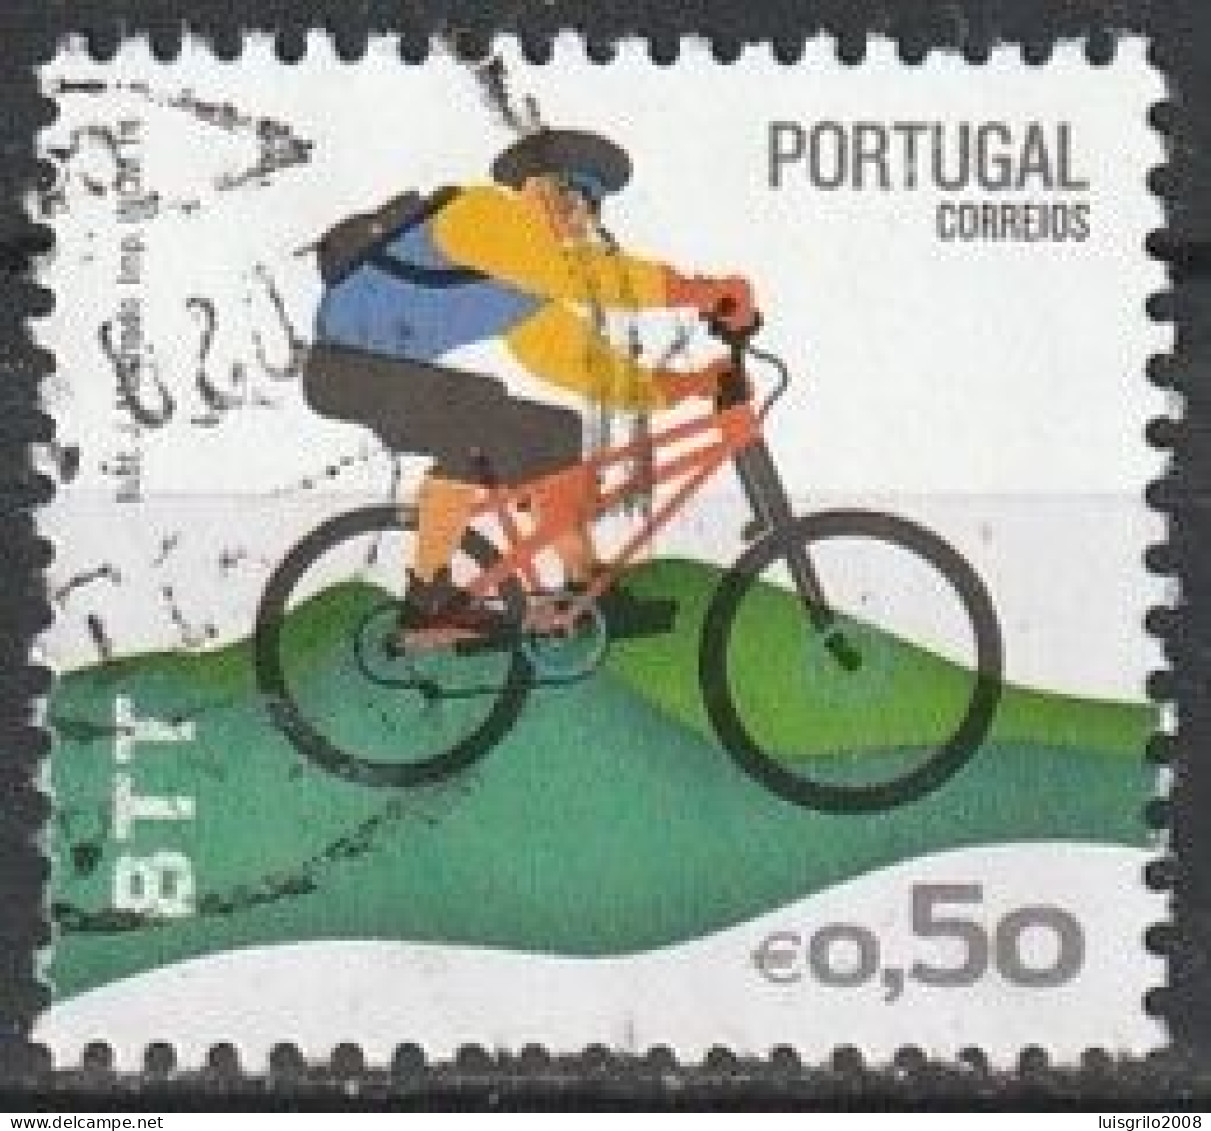 Portugal, 2014 - Desportos Radicais, €0,50 -|- Mundifil - 4408 - Used Stamps